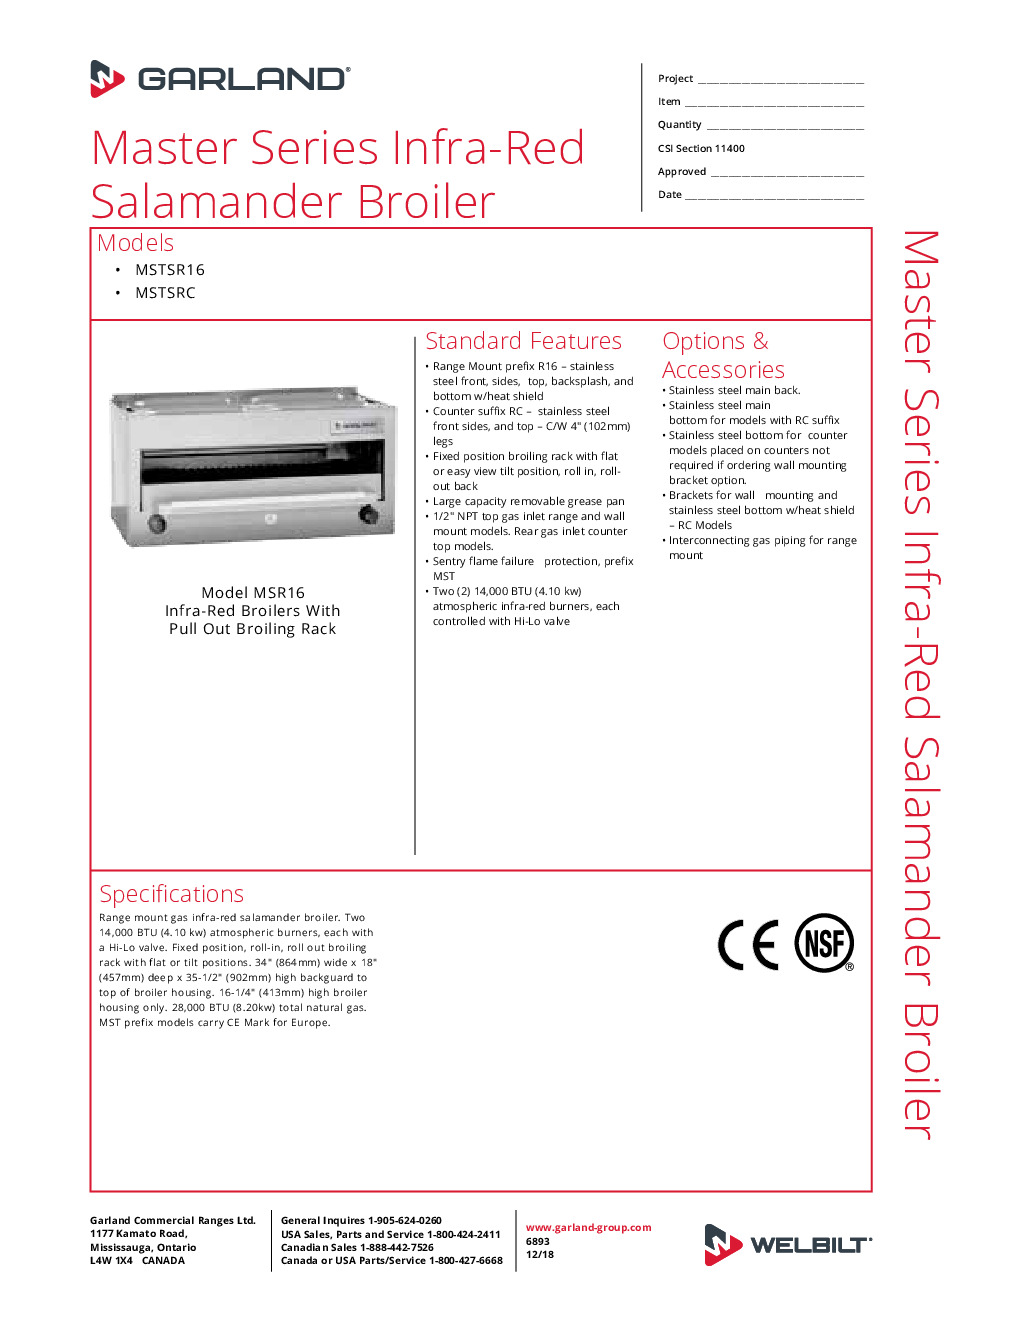 Garland US Range MSTSRCM Gas Salamander Broiler